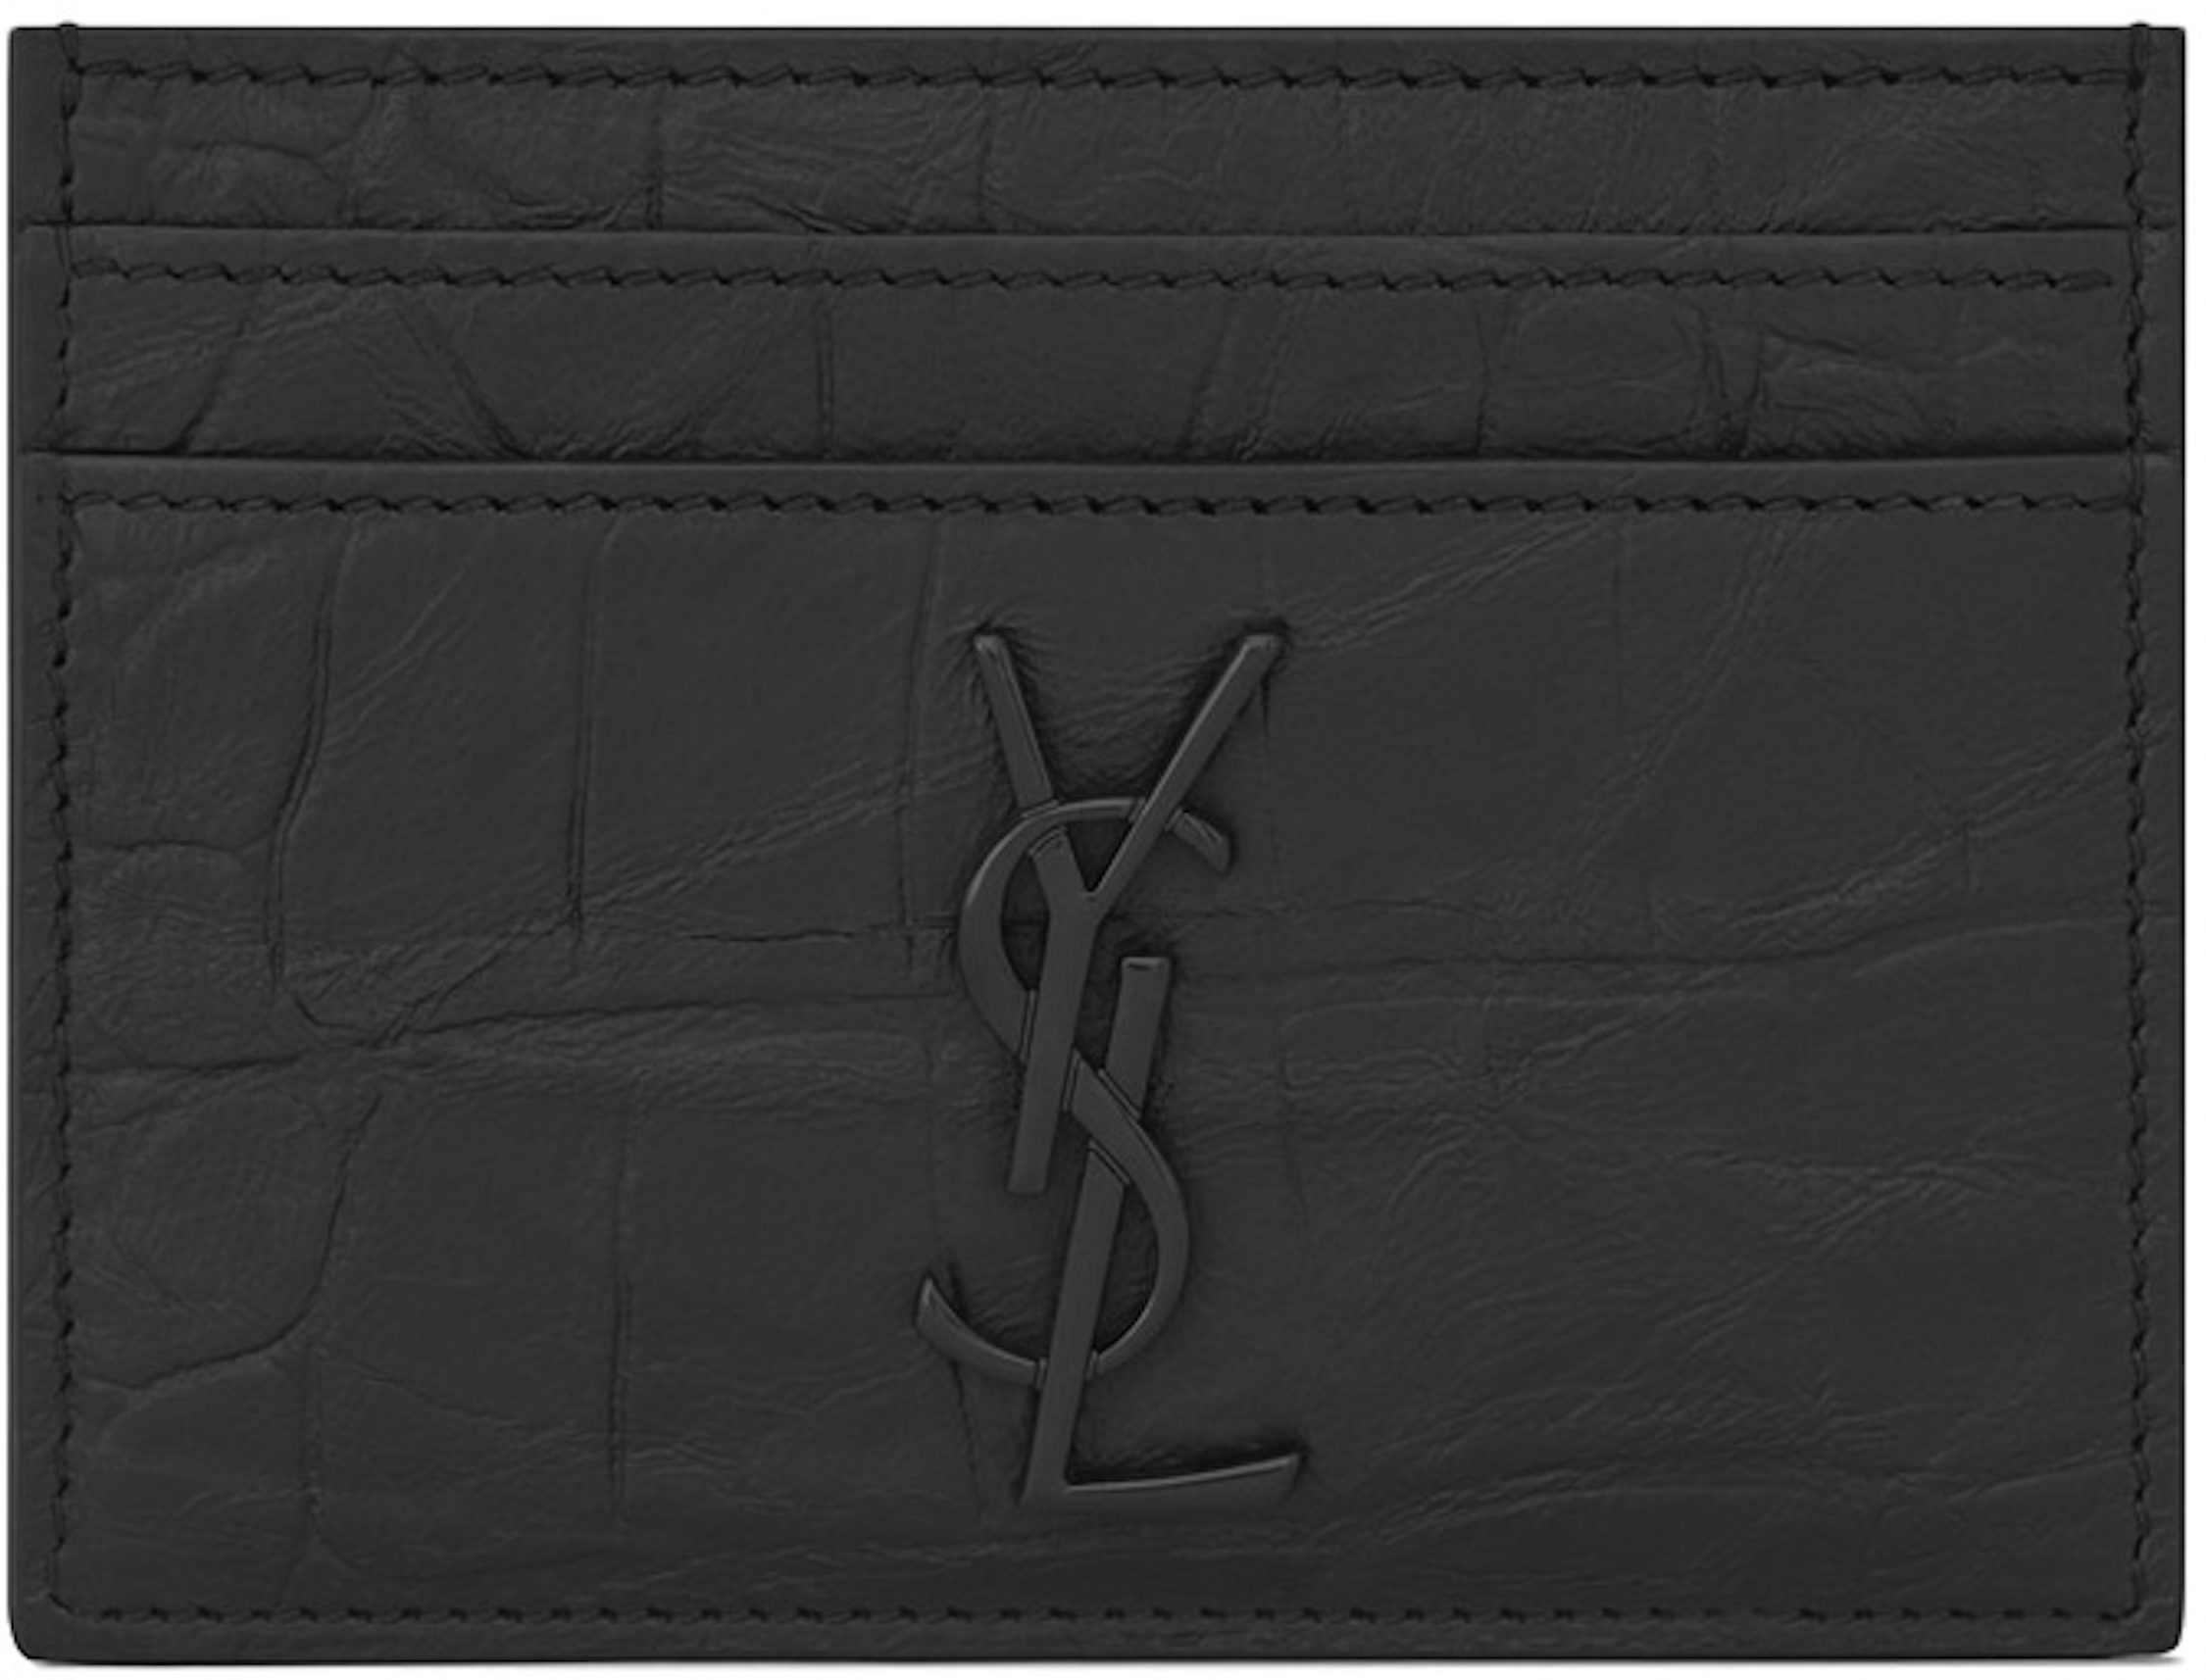 Leather Card Holder in Black - Saint Laurent